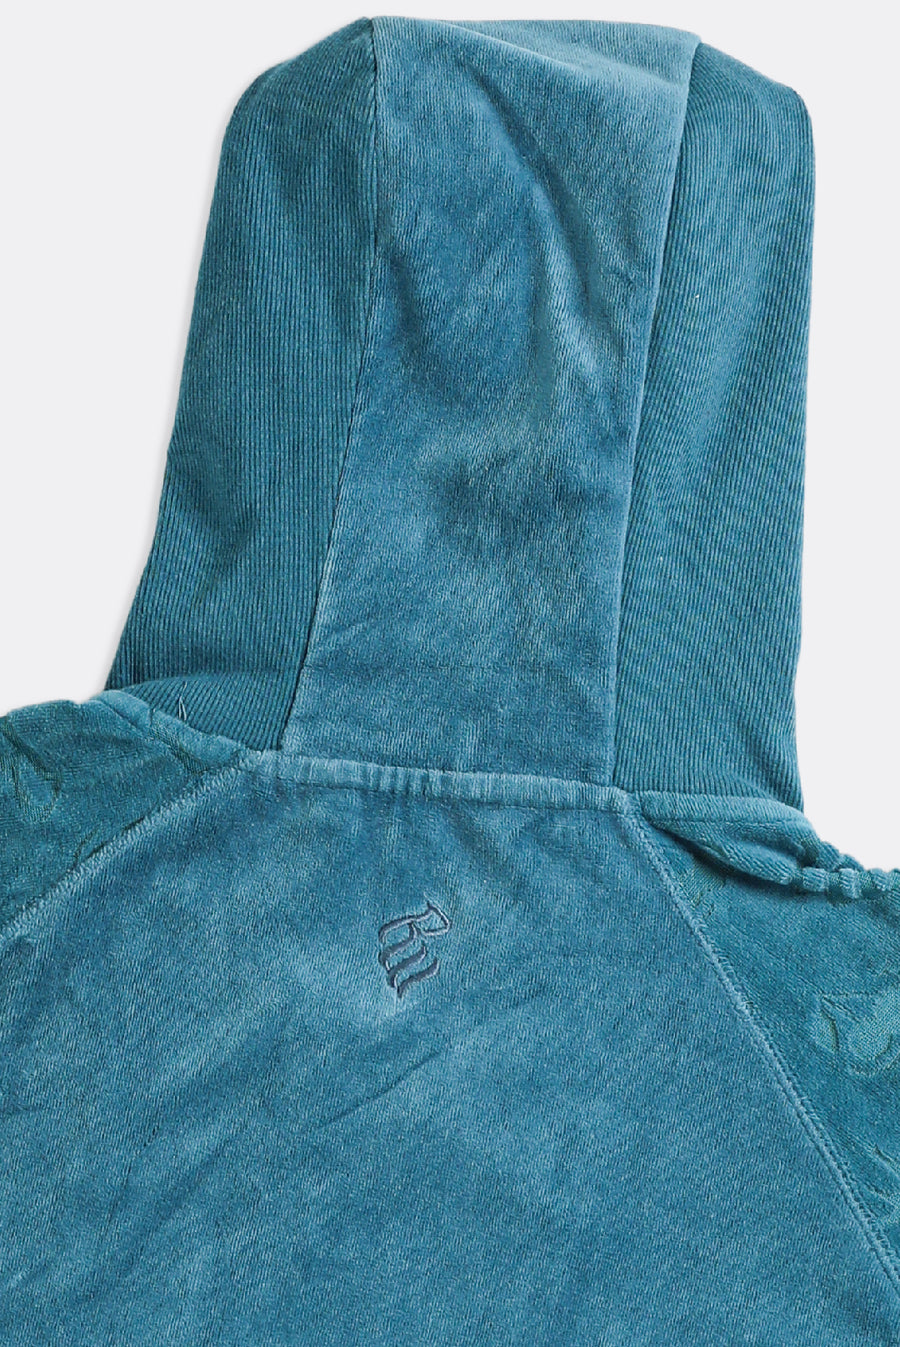 Vintage Rocawear Velour Sweatshirt - L